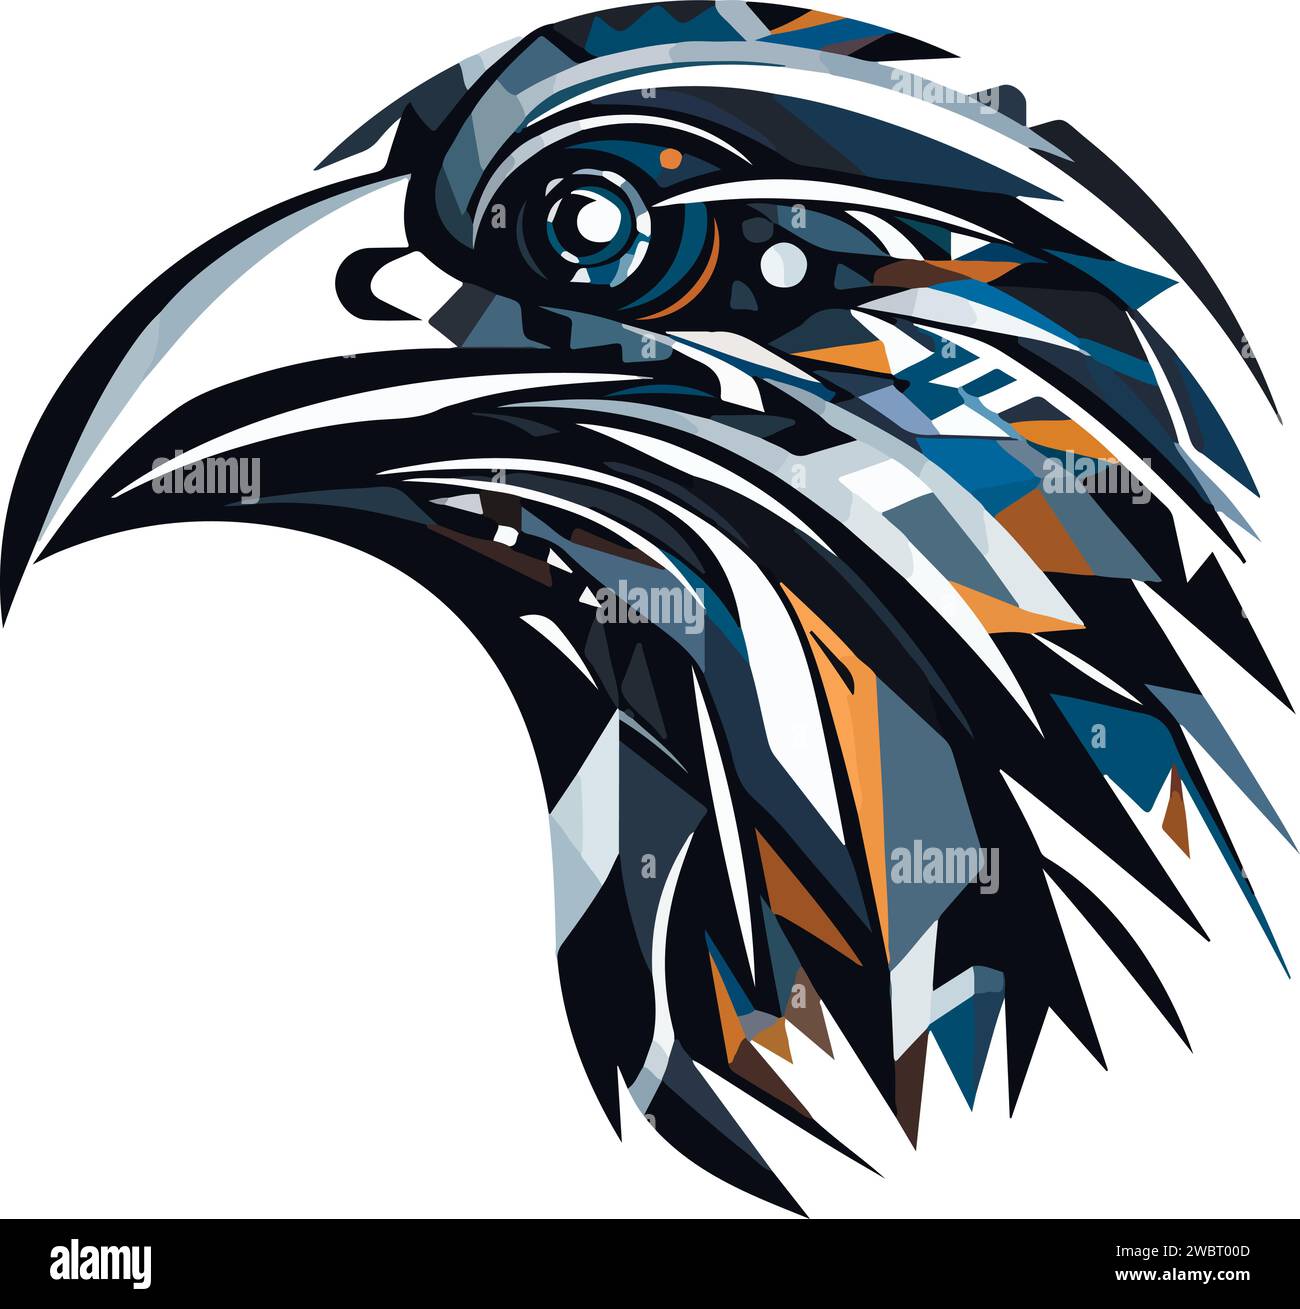 Vector ornamental ancient raven, crow illustration. Abstract historical mythology bird head logo. Good for print or tattoo. Stock Vector